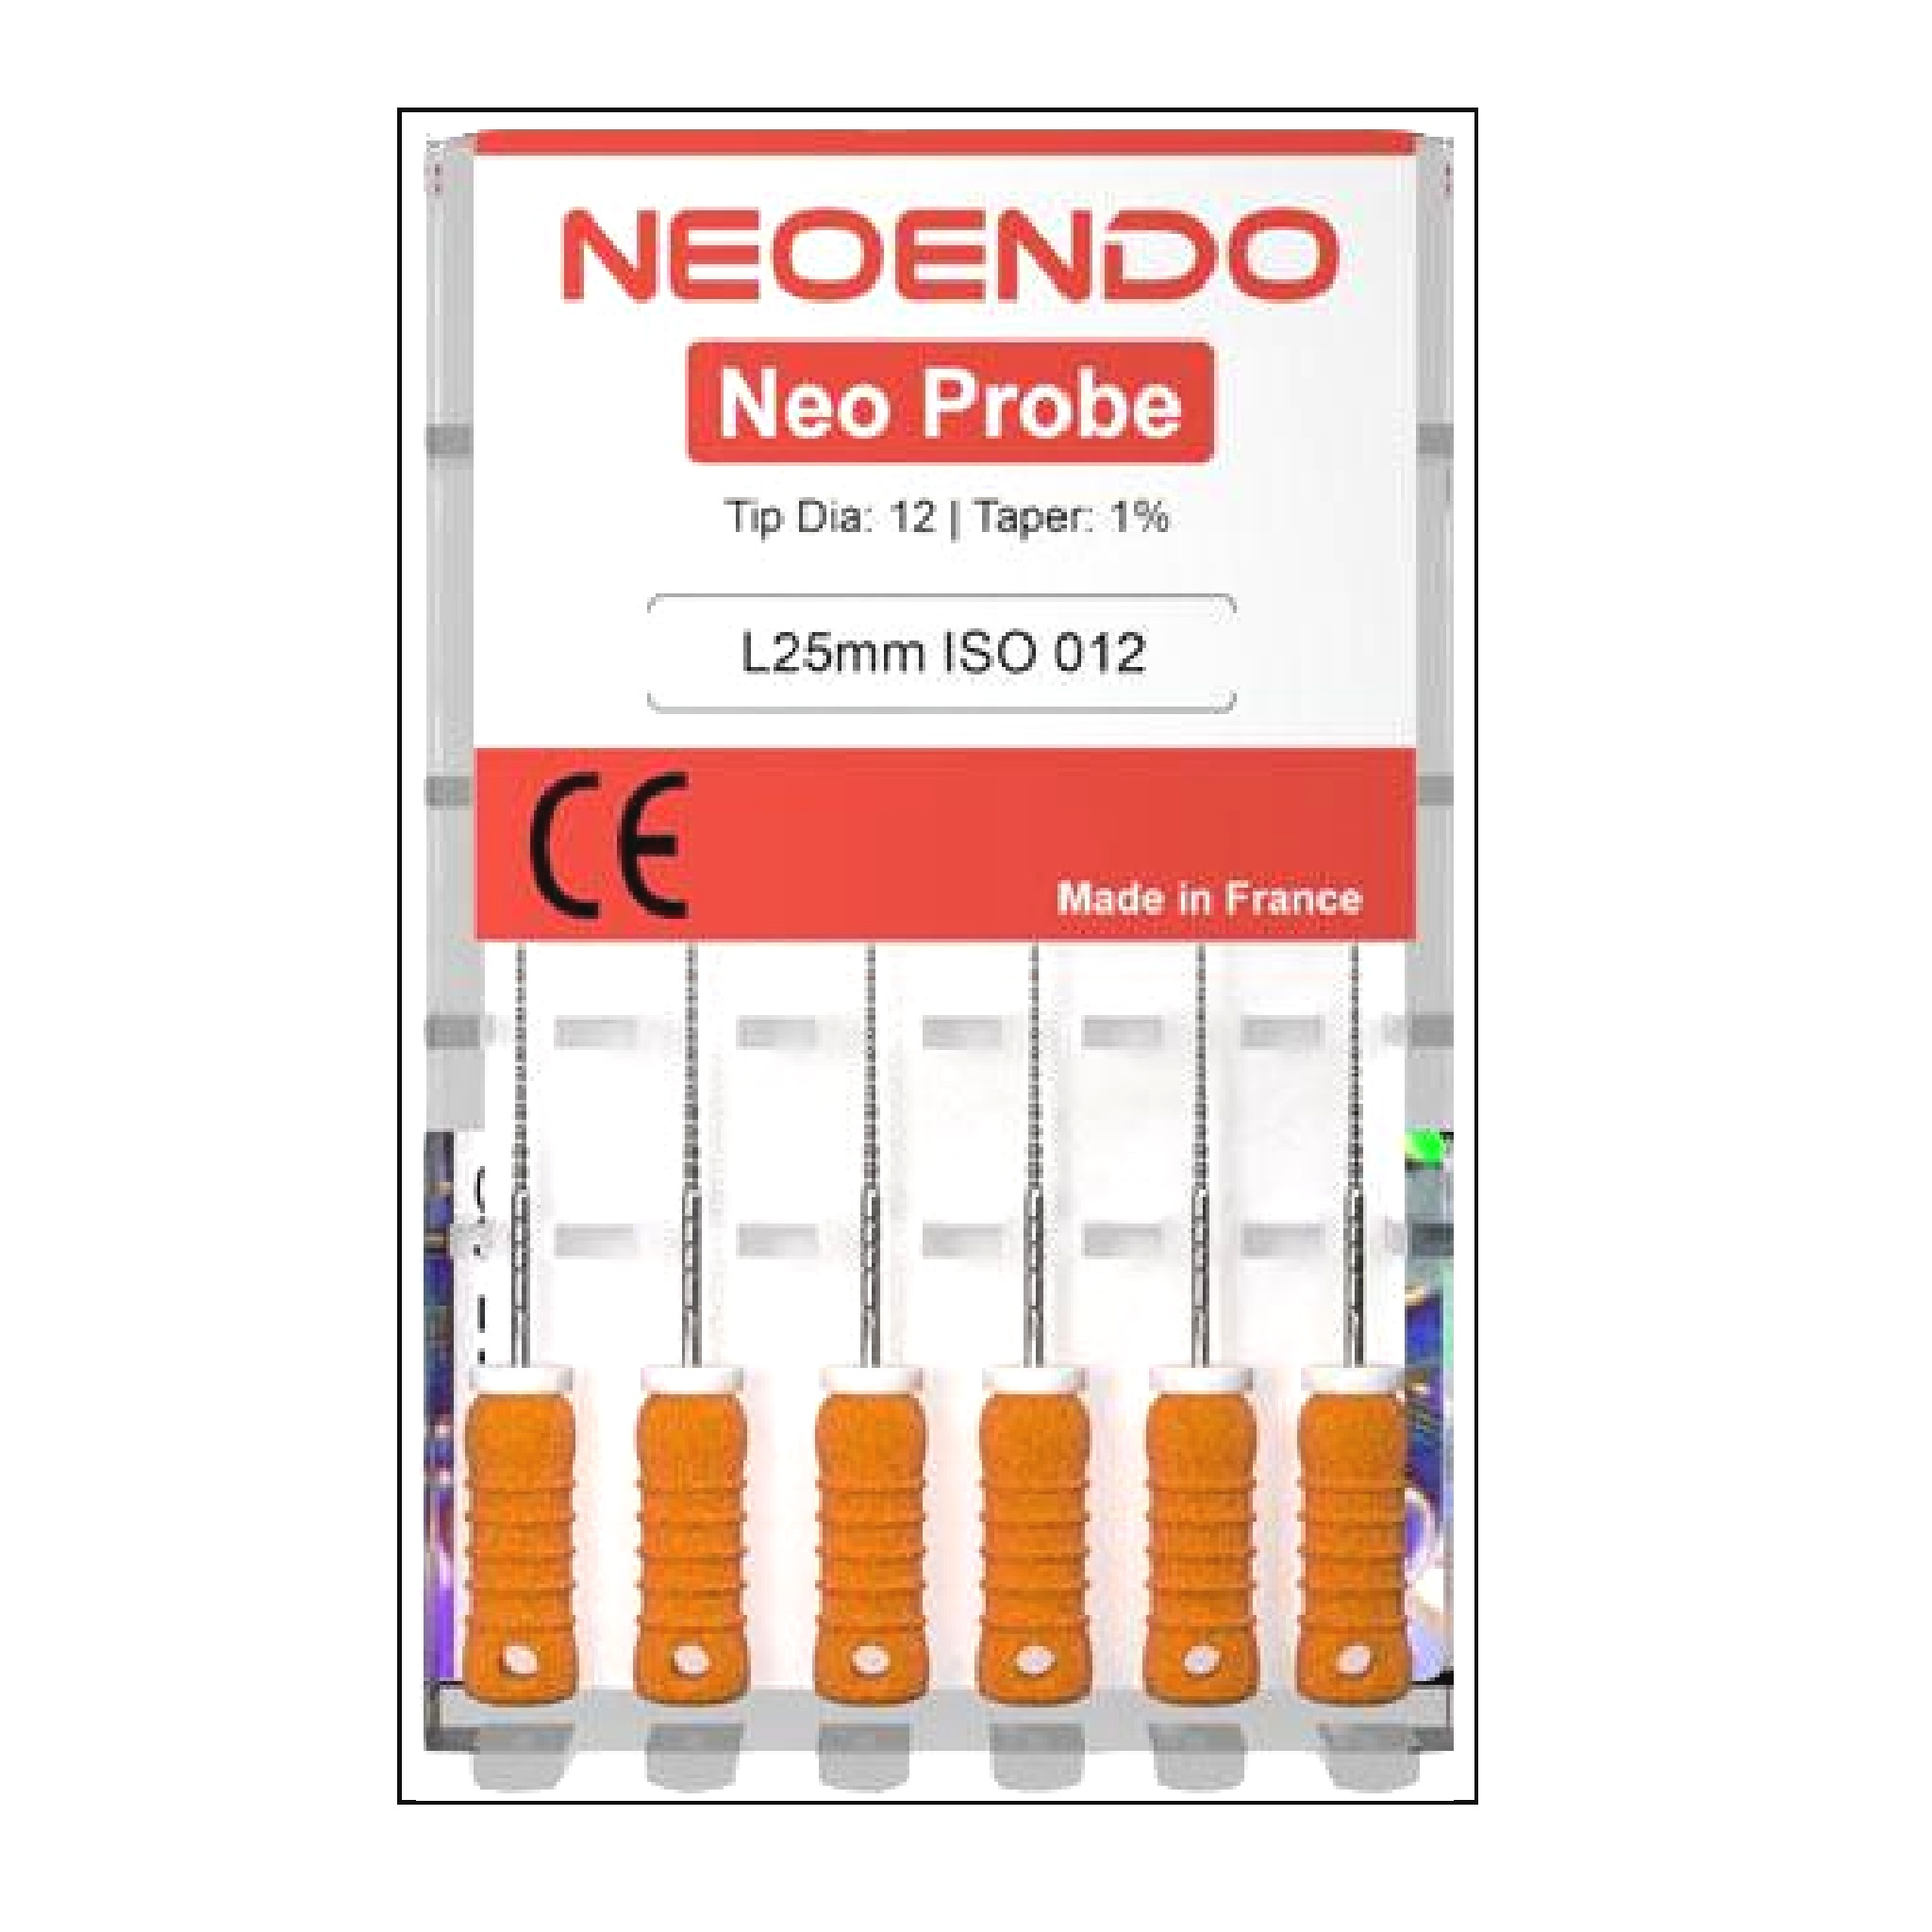 Orikam NeoEndo NeoProbe Dental Endodontic Hand Files Pack Of 6 (21mm)